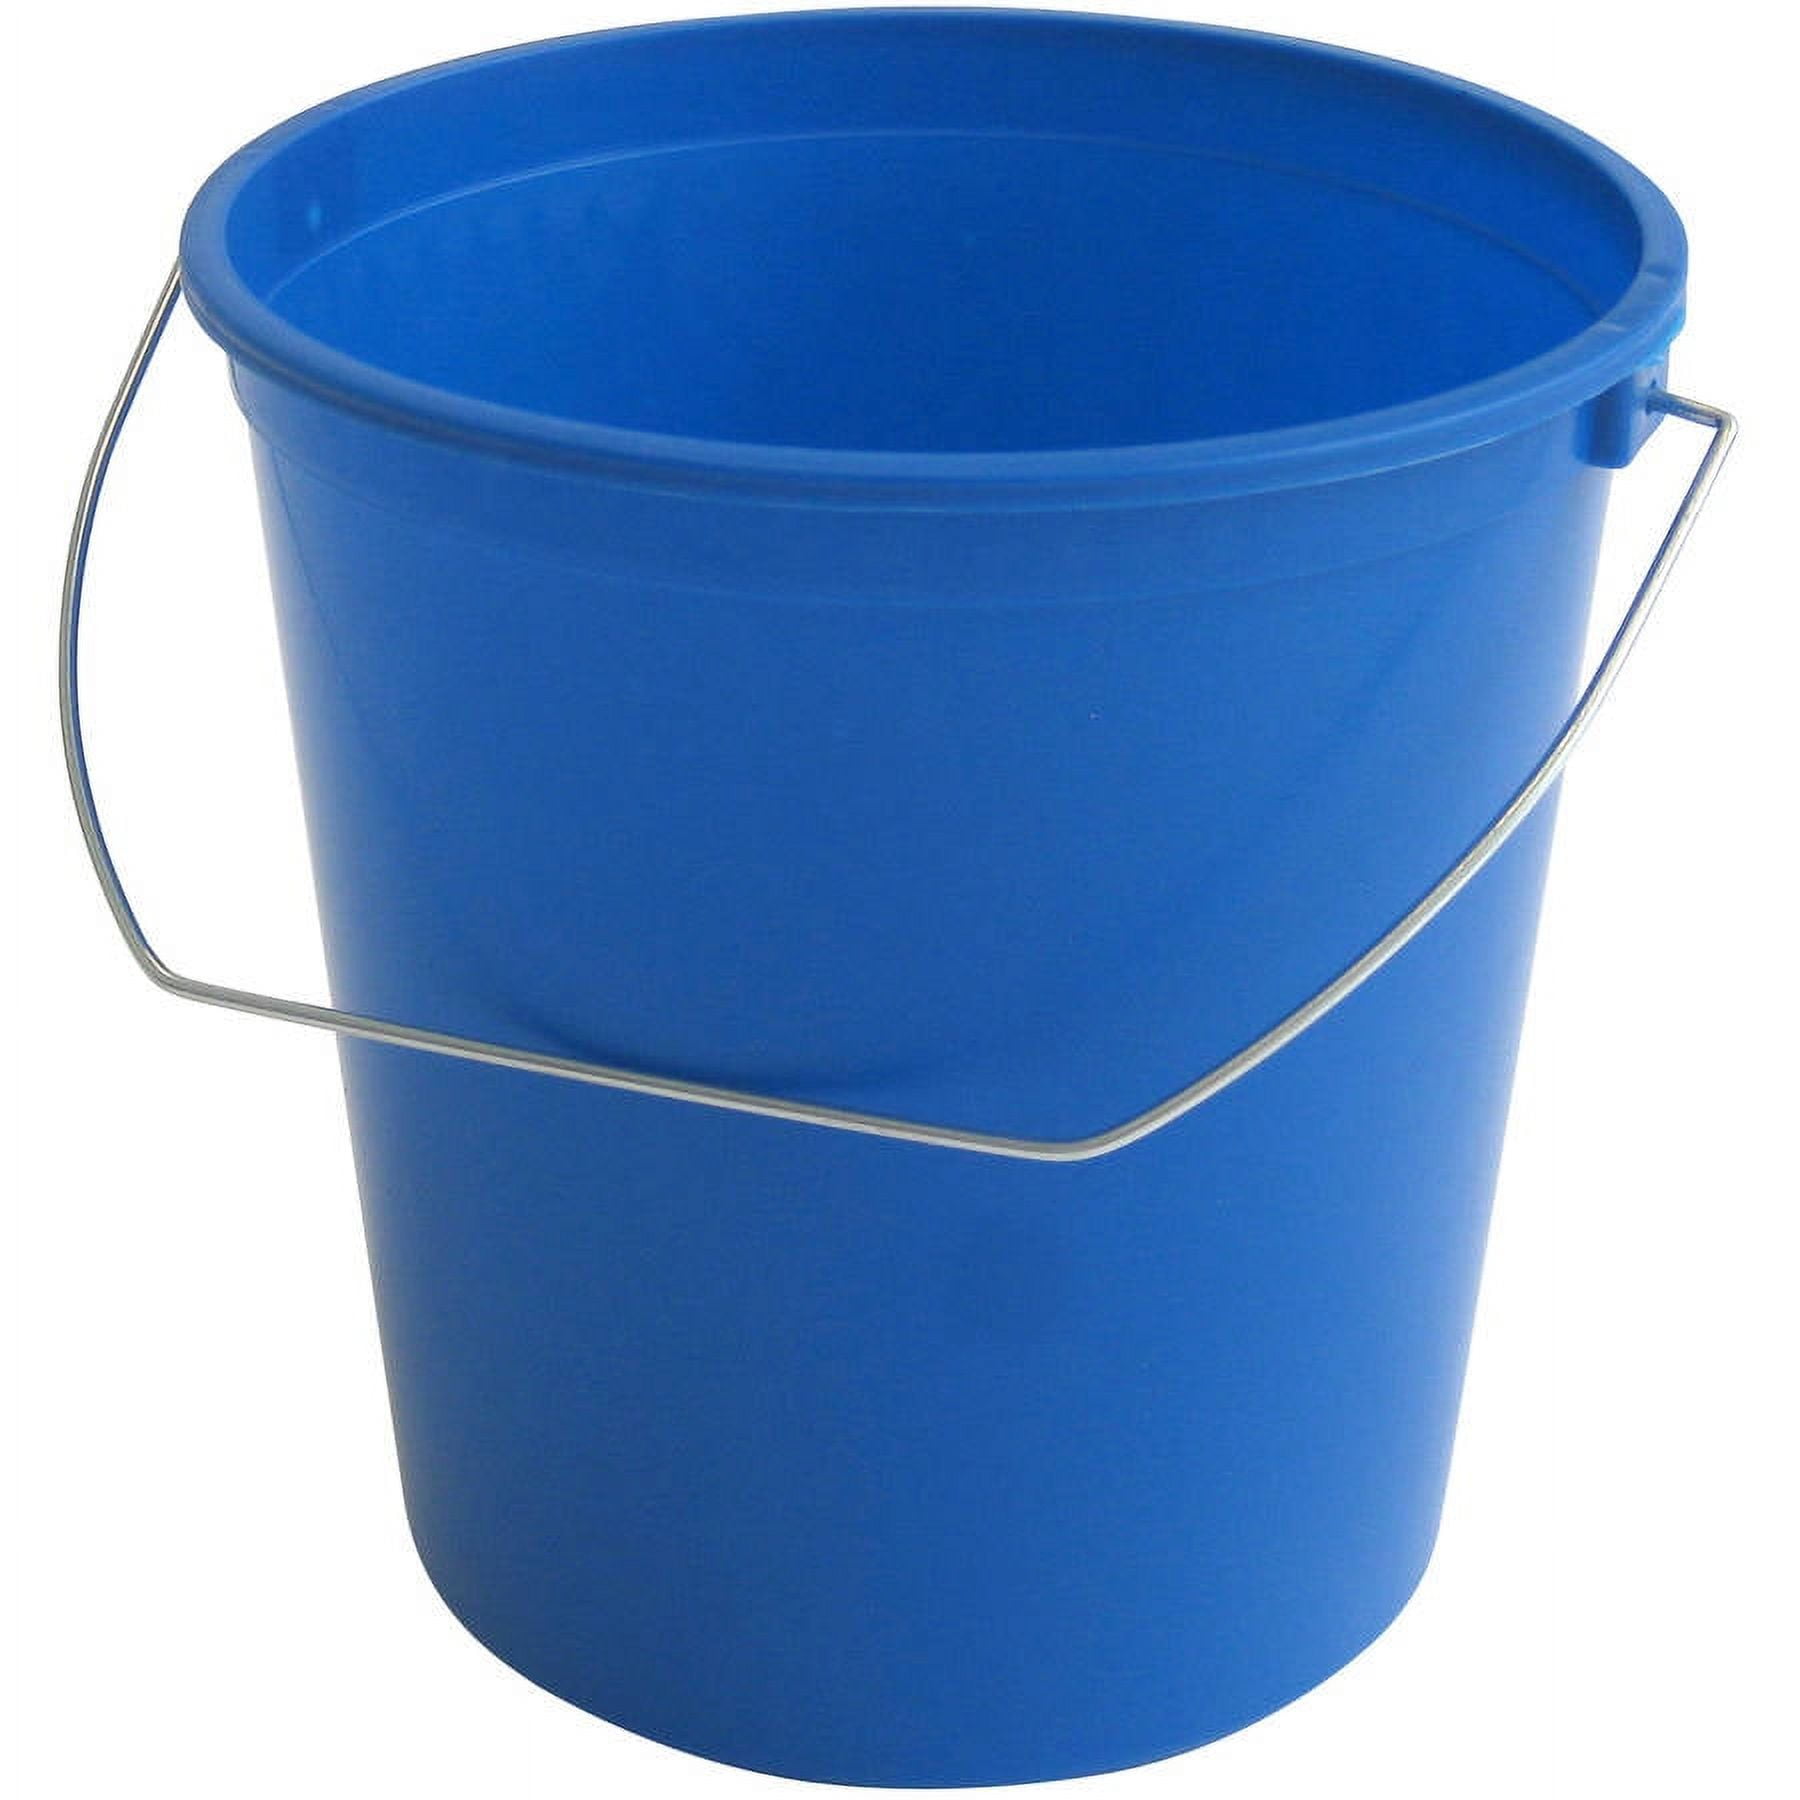 Caribbean Blue Plastic Buckets with Handles 11cm h x 17cm dia - 12 PC :  Amscan International